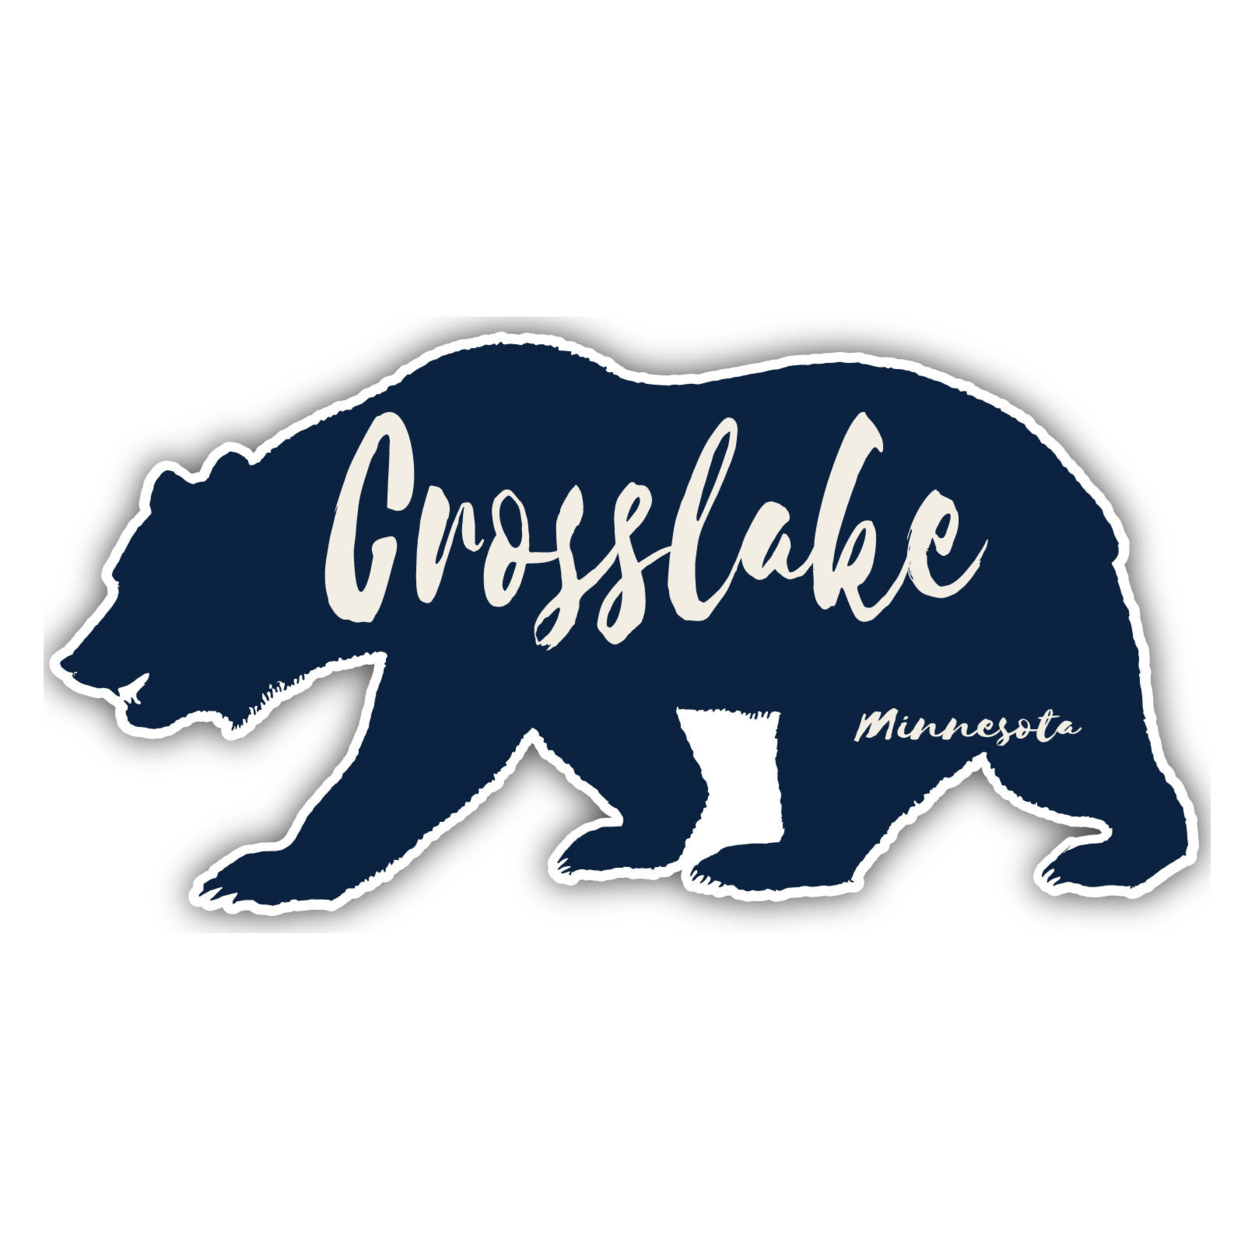 Crosslake Minnesota Souvenir Decorative Stickers (Choose Theme And Size) - Single Unit, 4-Inch, Bear